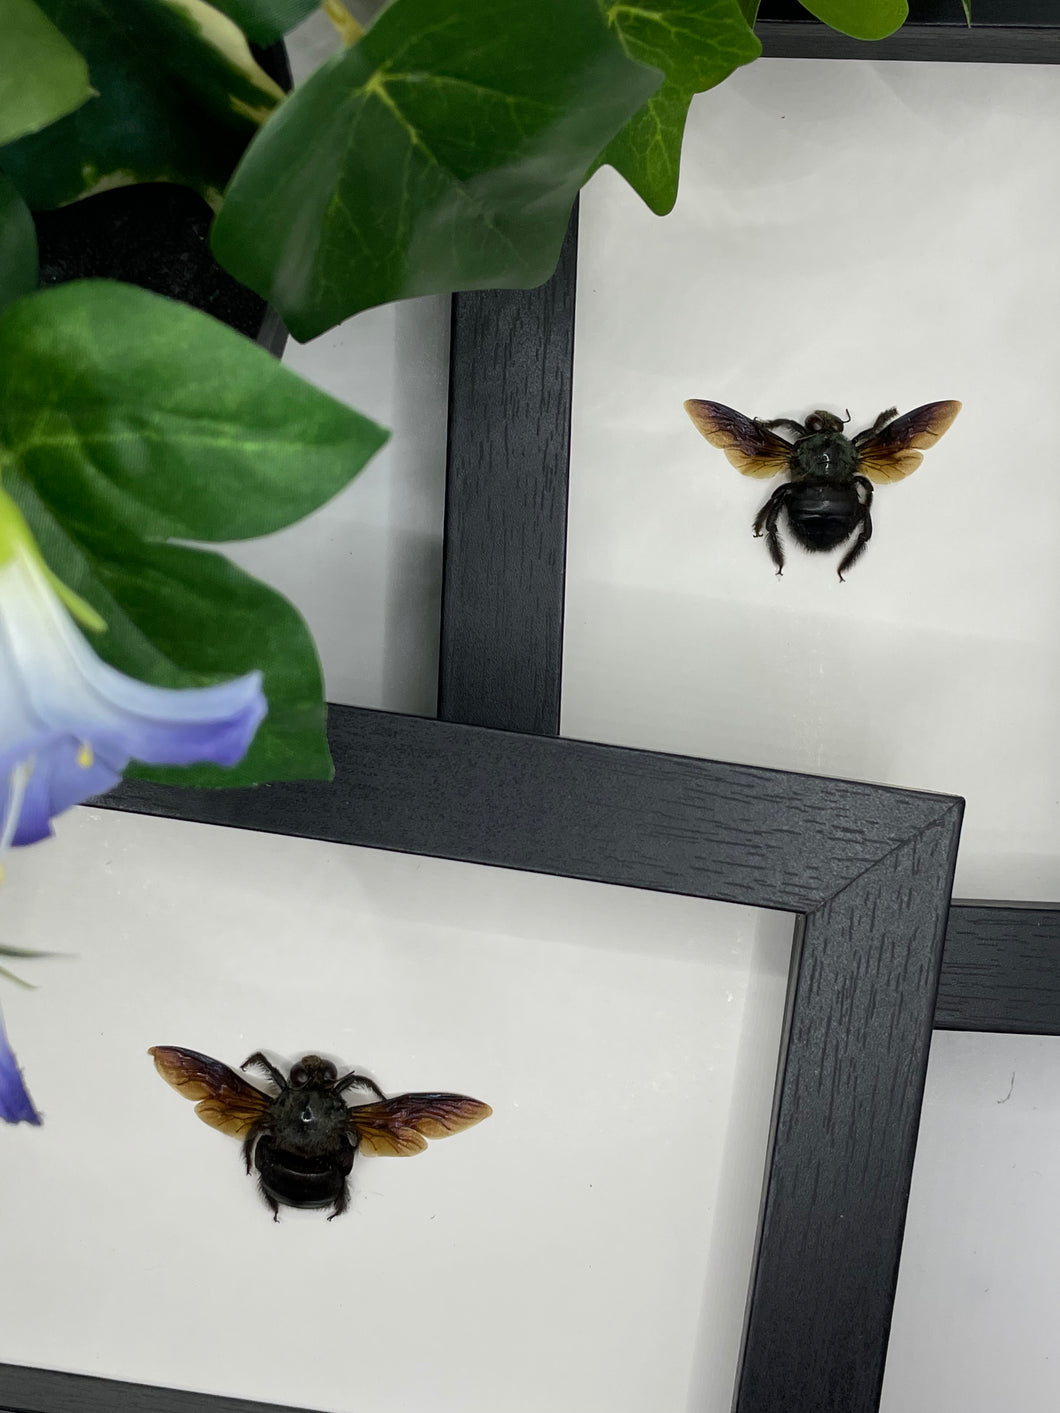 Carpenter Bee / Xylocopa Caerulea in a frame